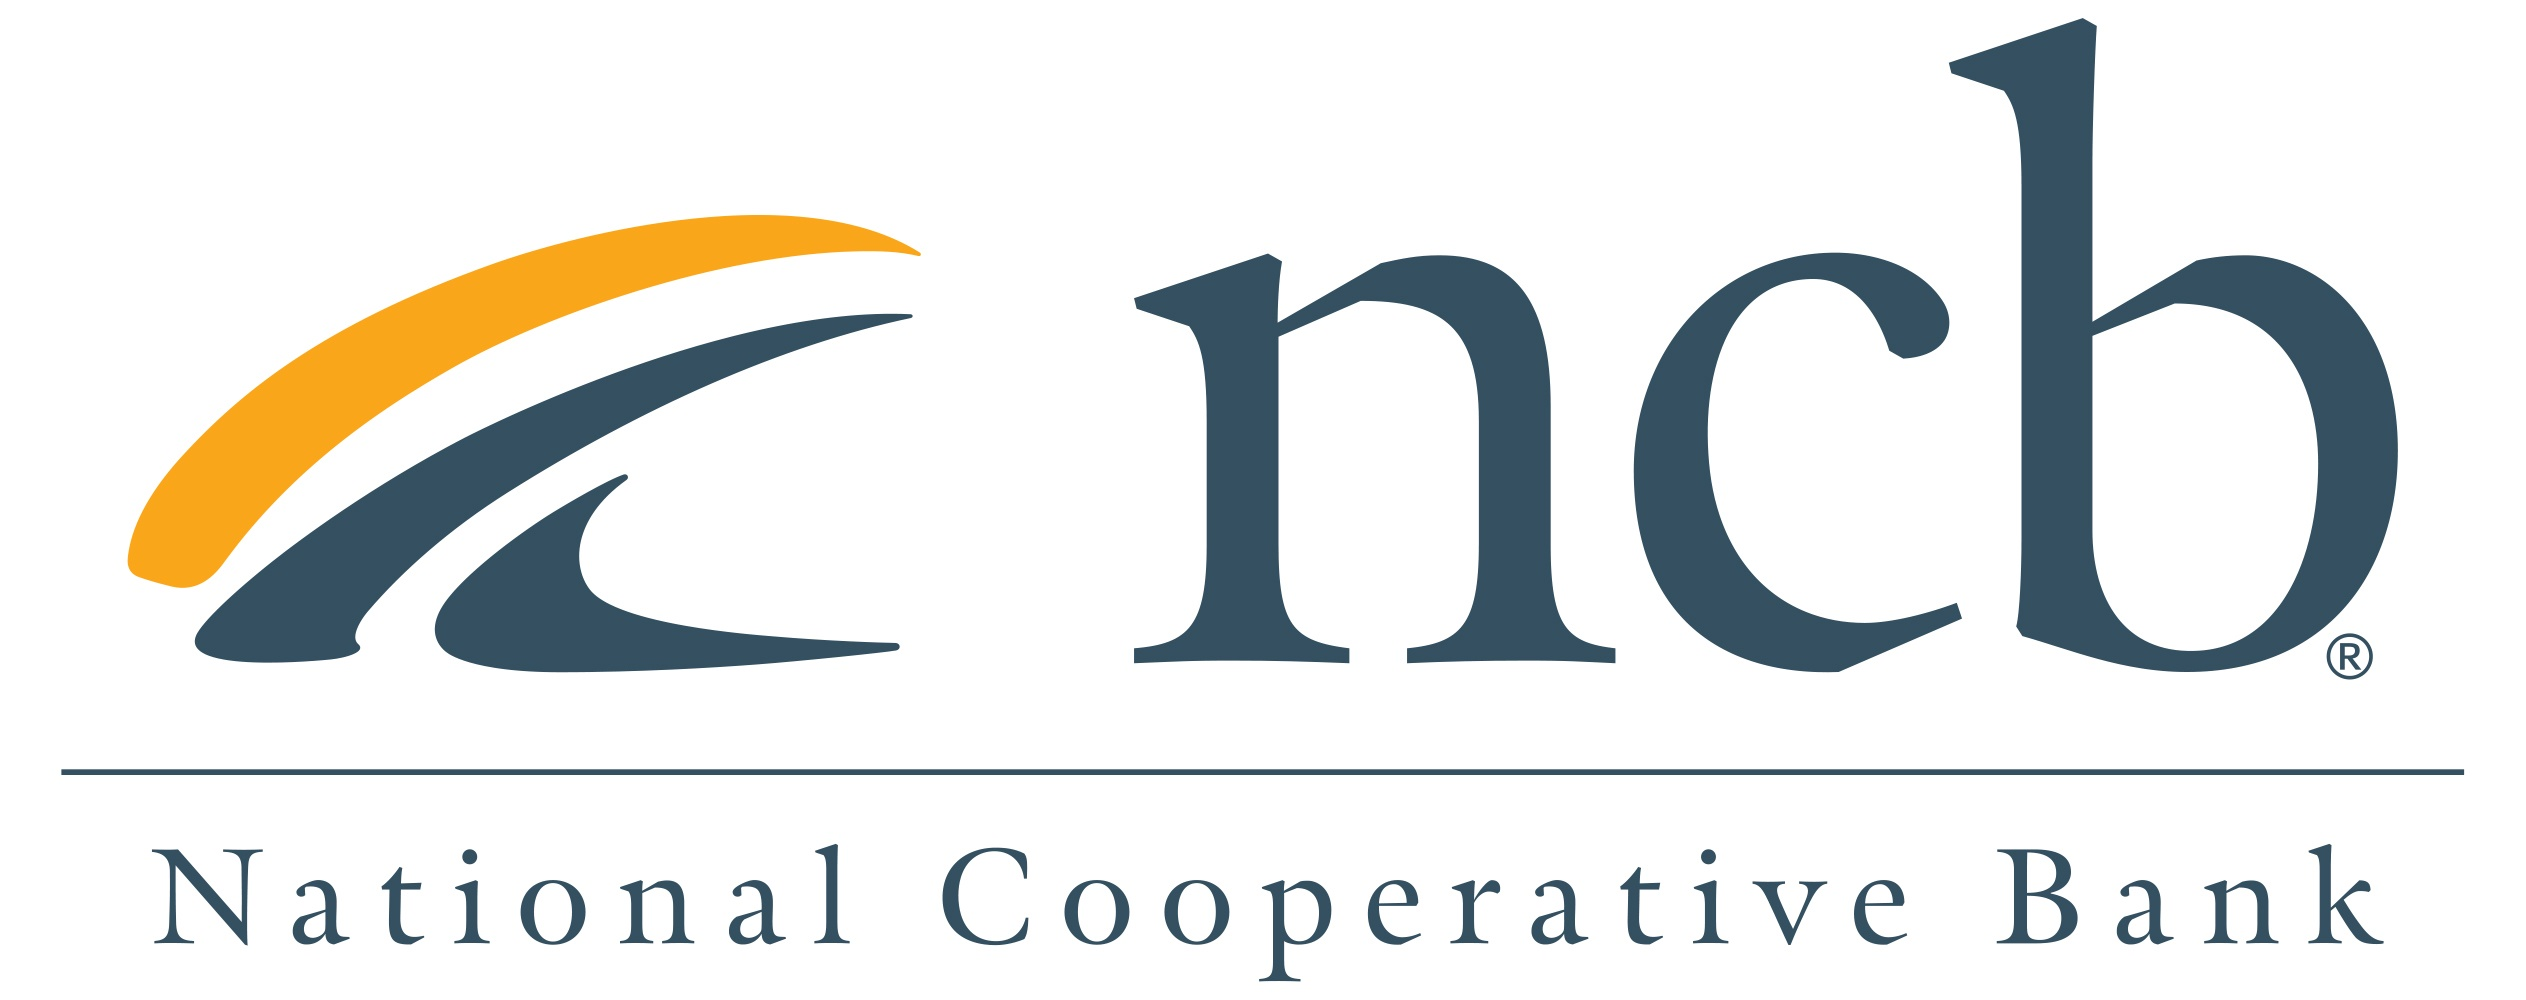 National Cooperative Bank, N.A. logo